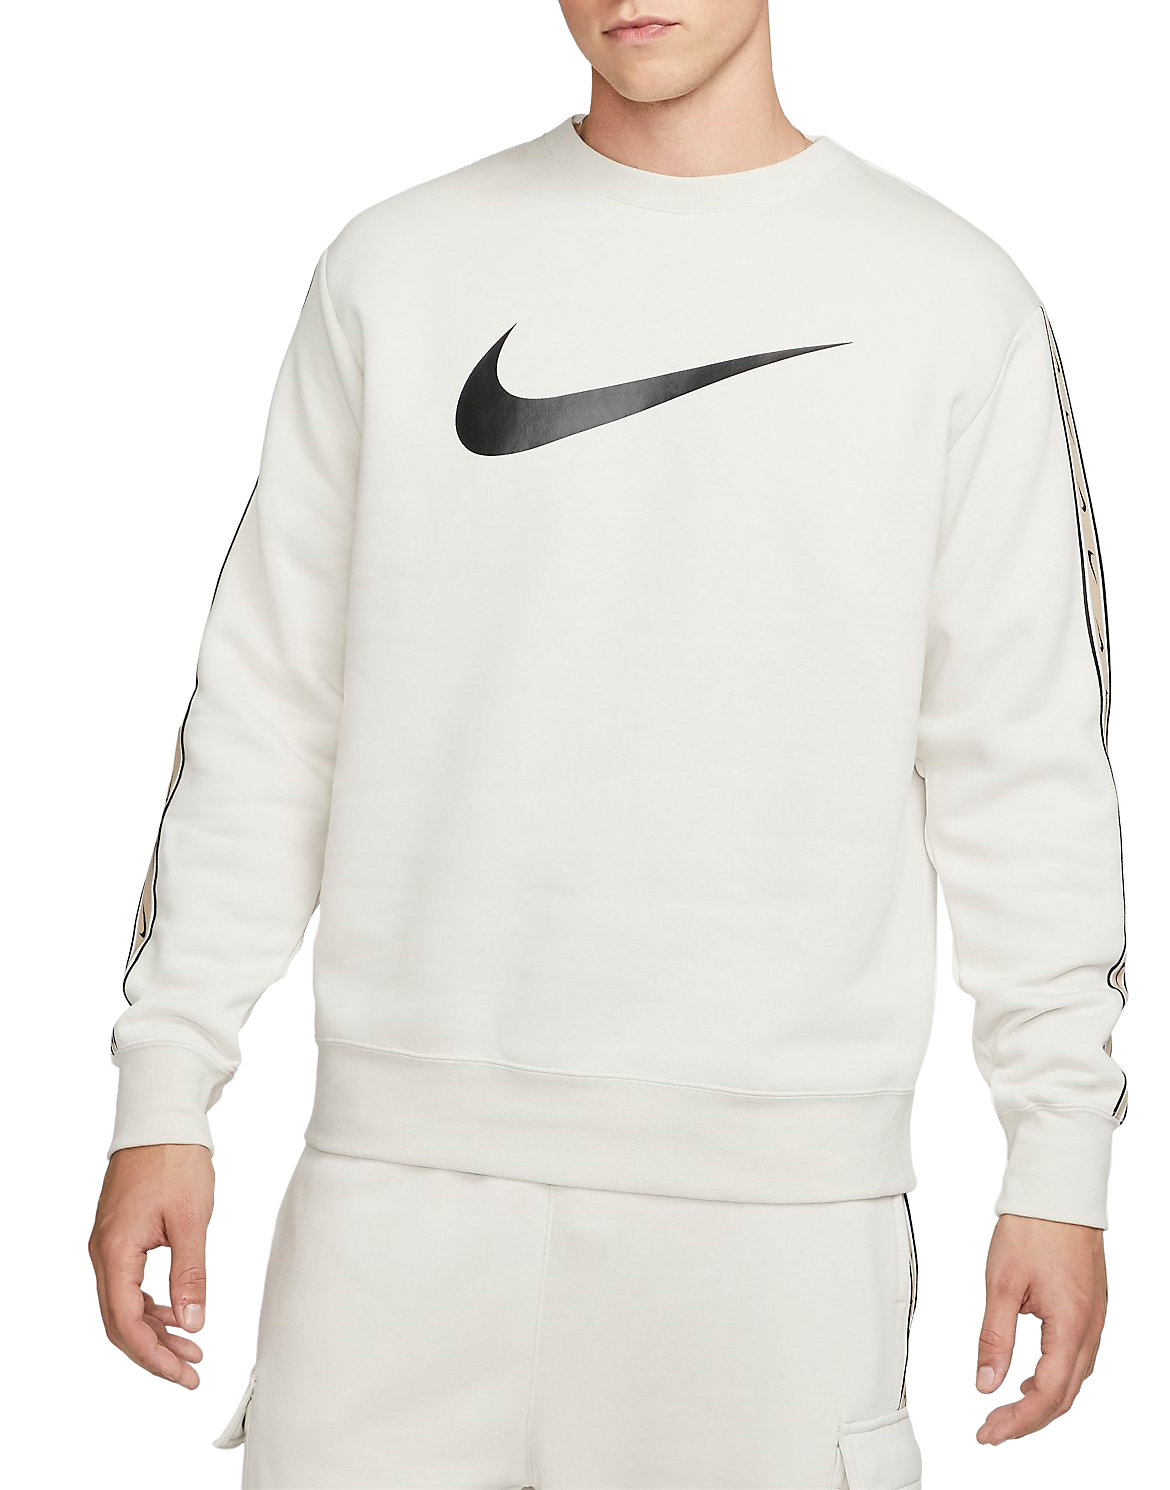 Sweatshirt Nike team Sportswear Repeat